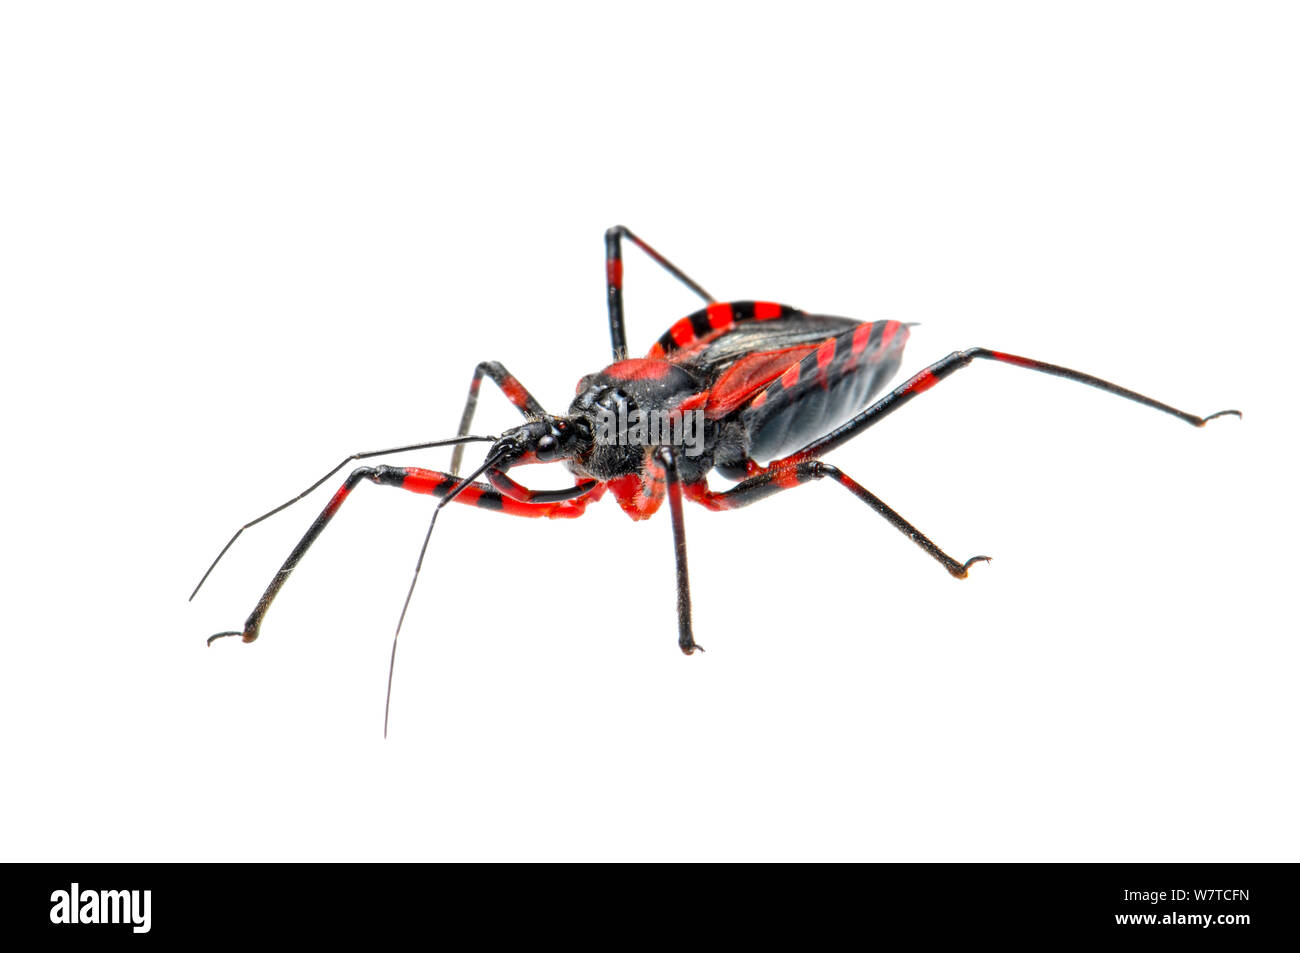 Red Assassin Bug (Rhynocoris iracundus), Slovenia, Europe, June Meetyourneighbours.net project Stock Photo